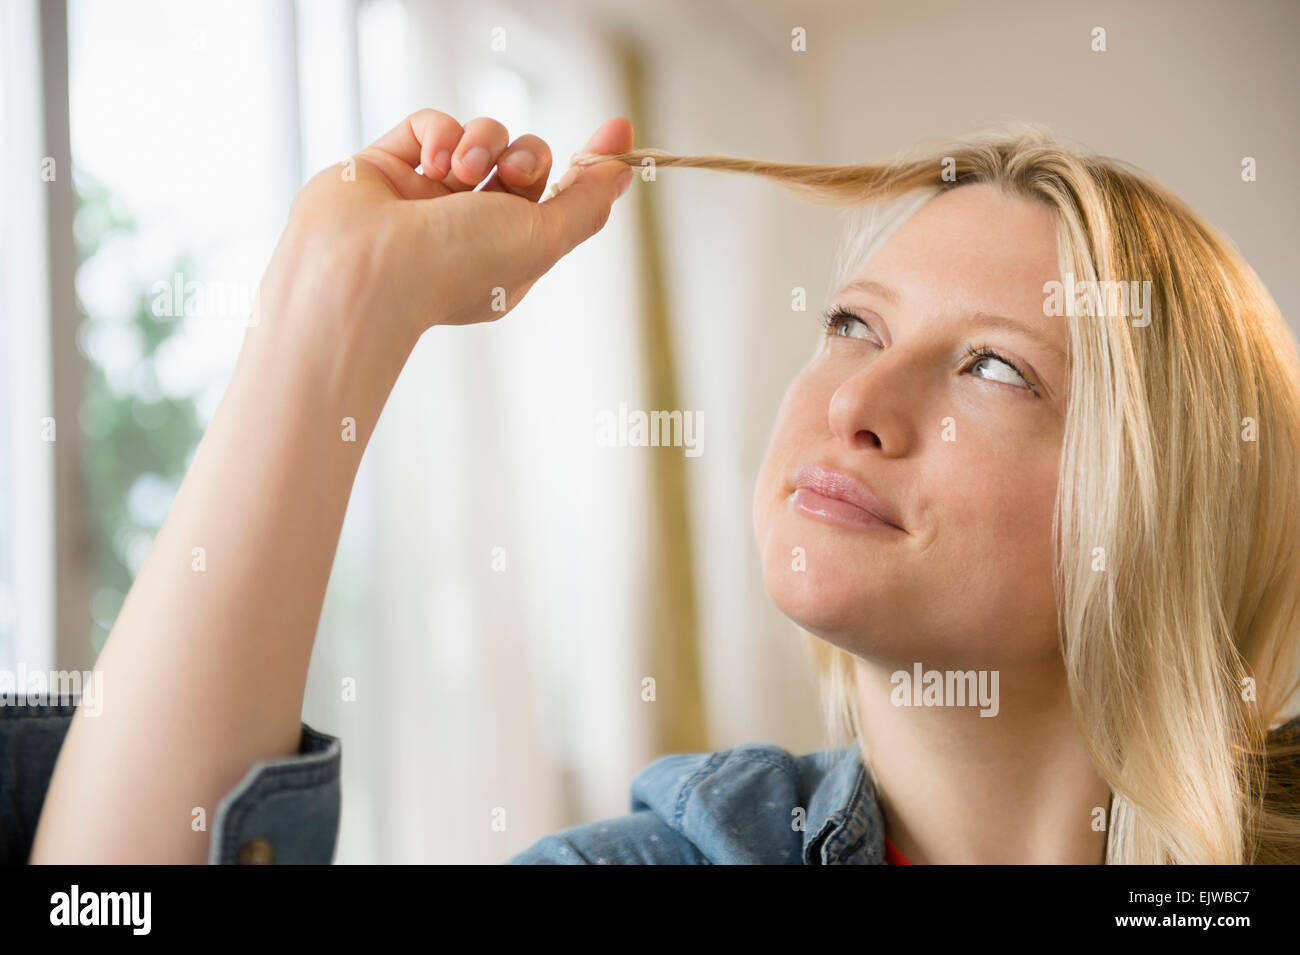 Woman twisting her hair Stock Photo